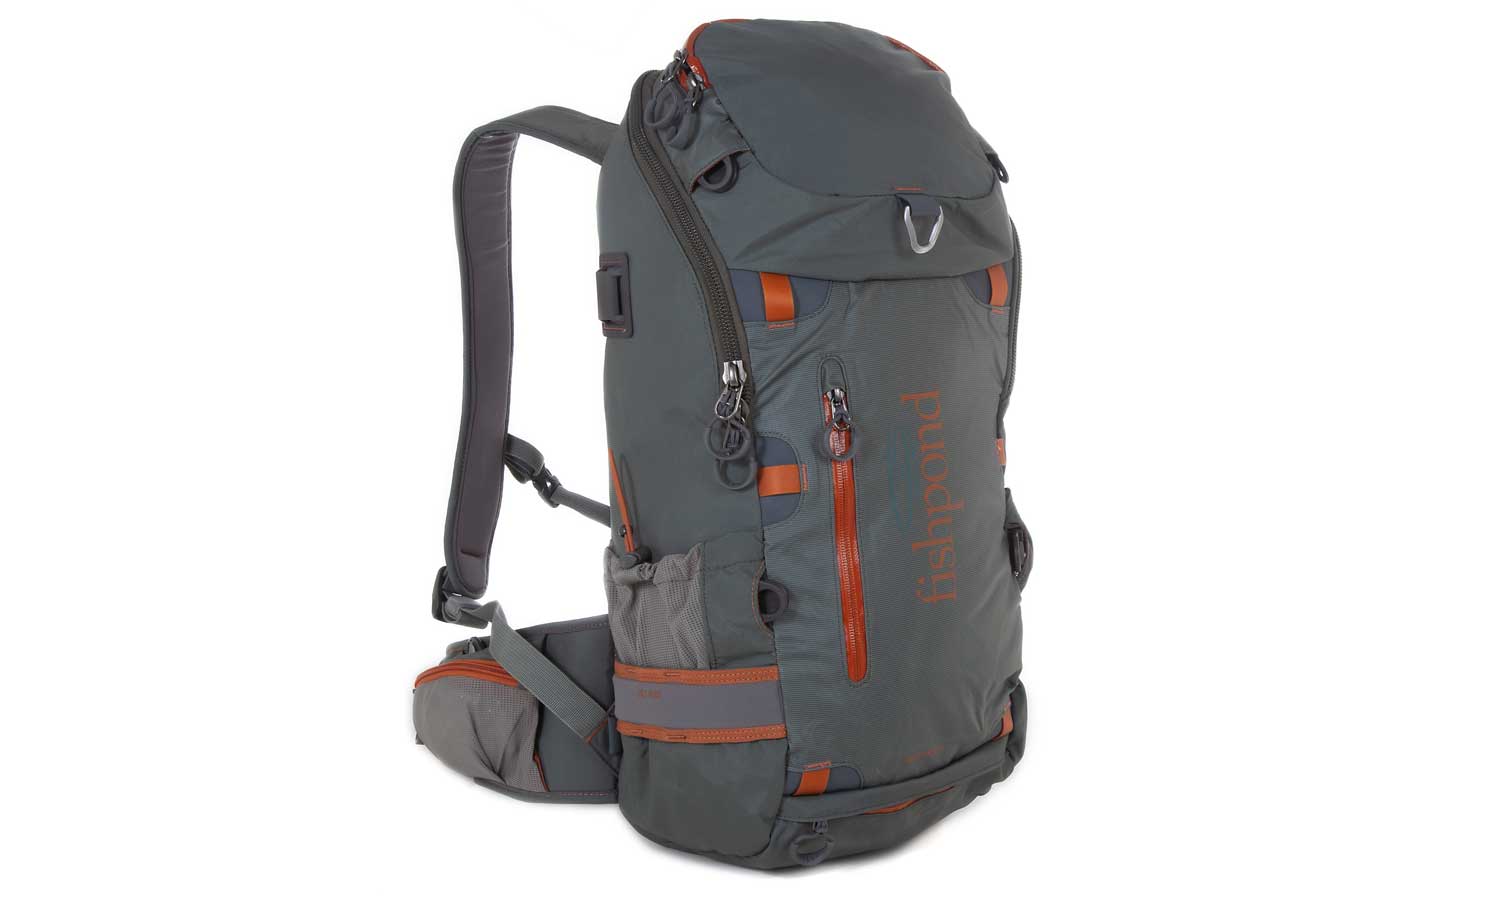 Fishpond Firehole Backpack - Backpacks & Gear Bags - Alaska Fly